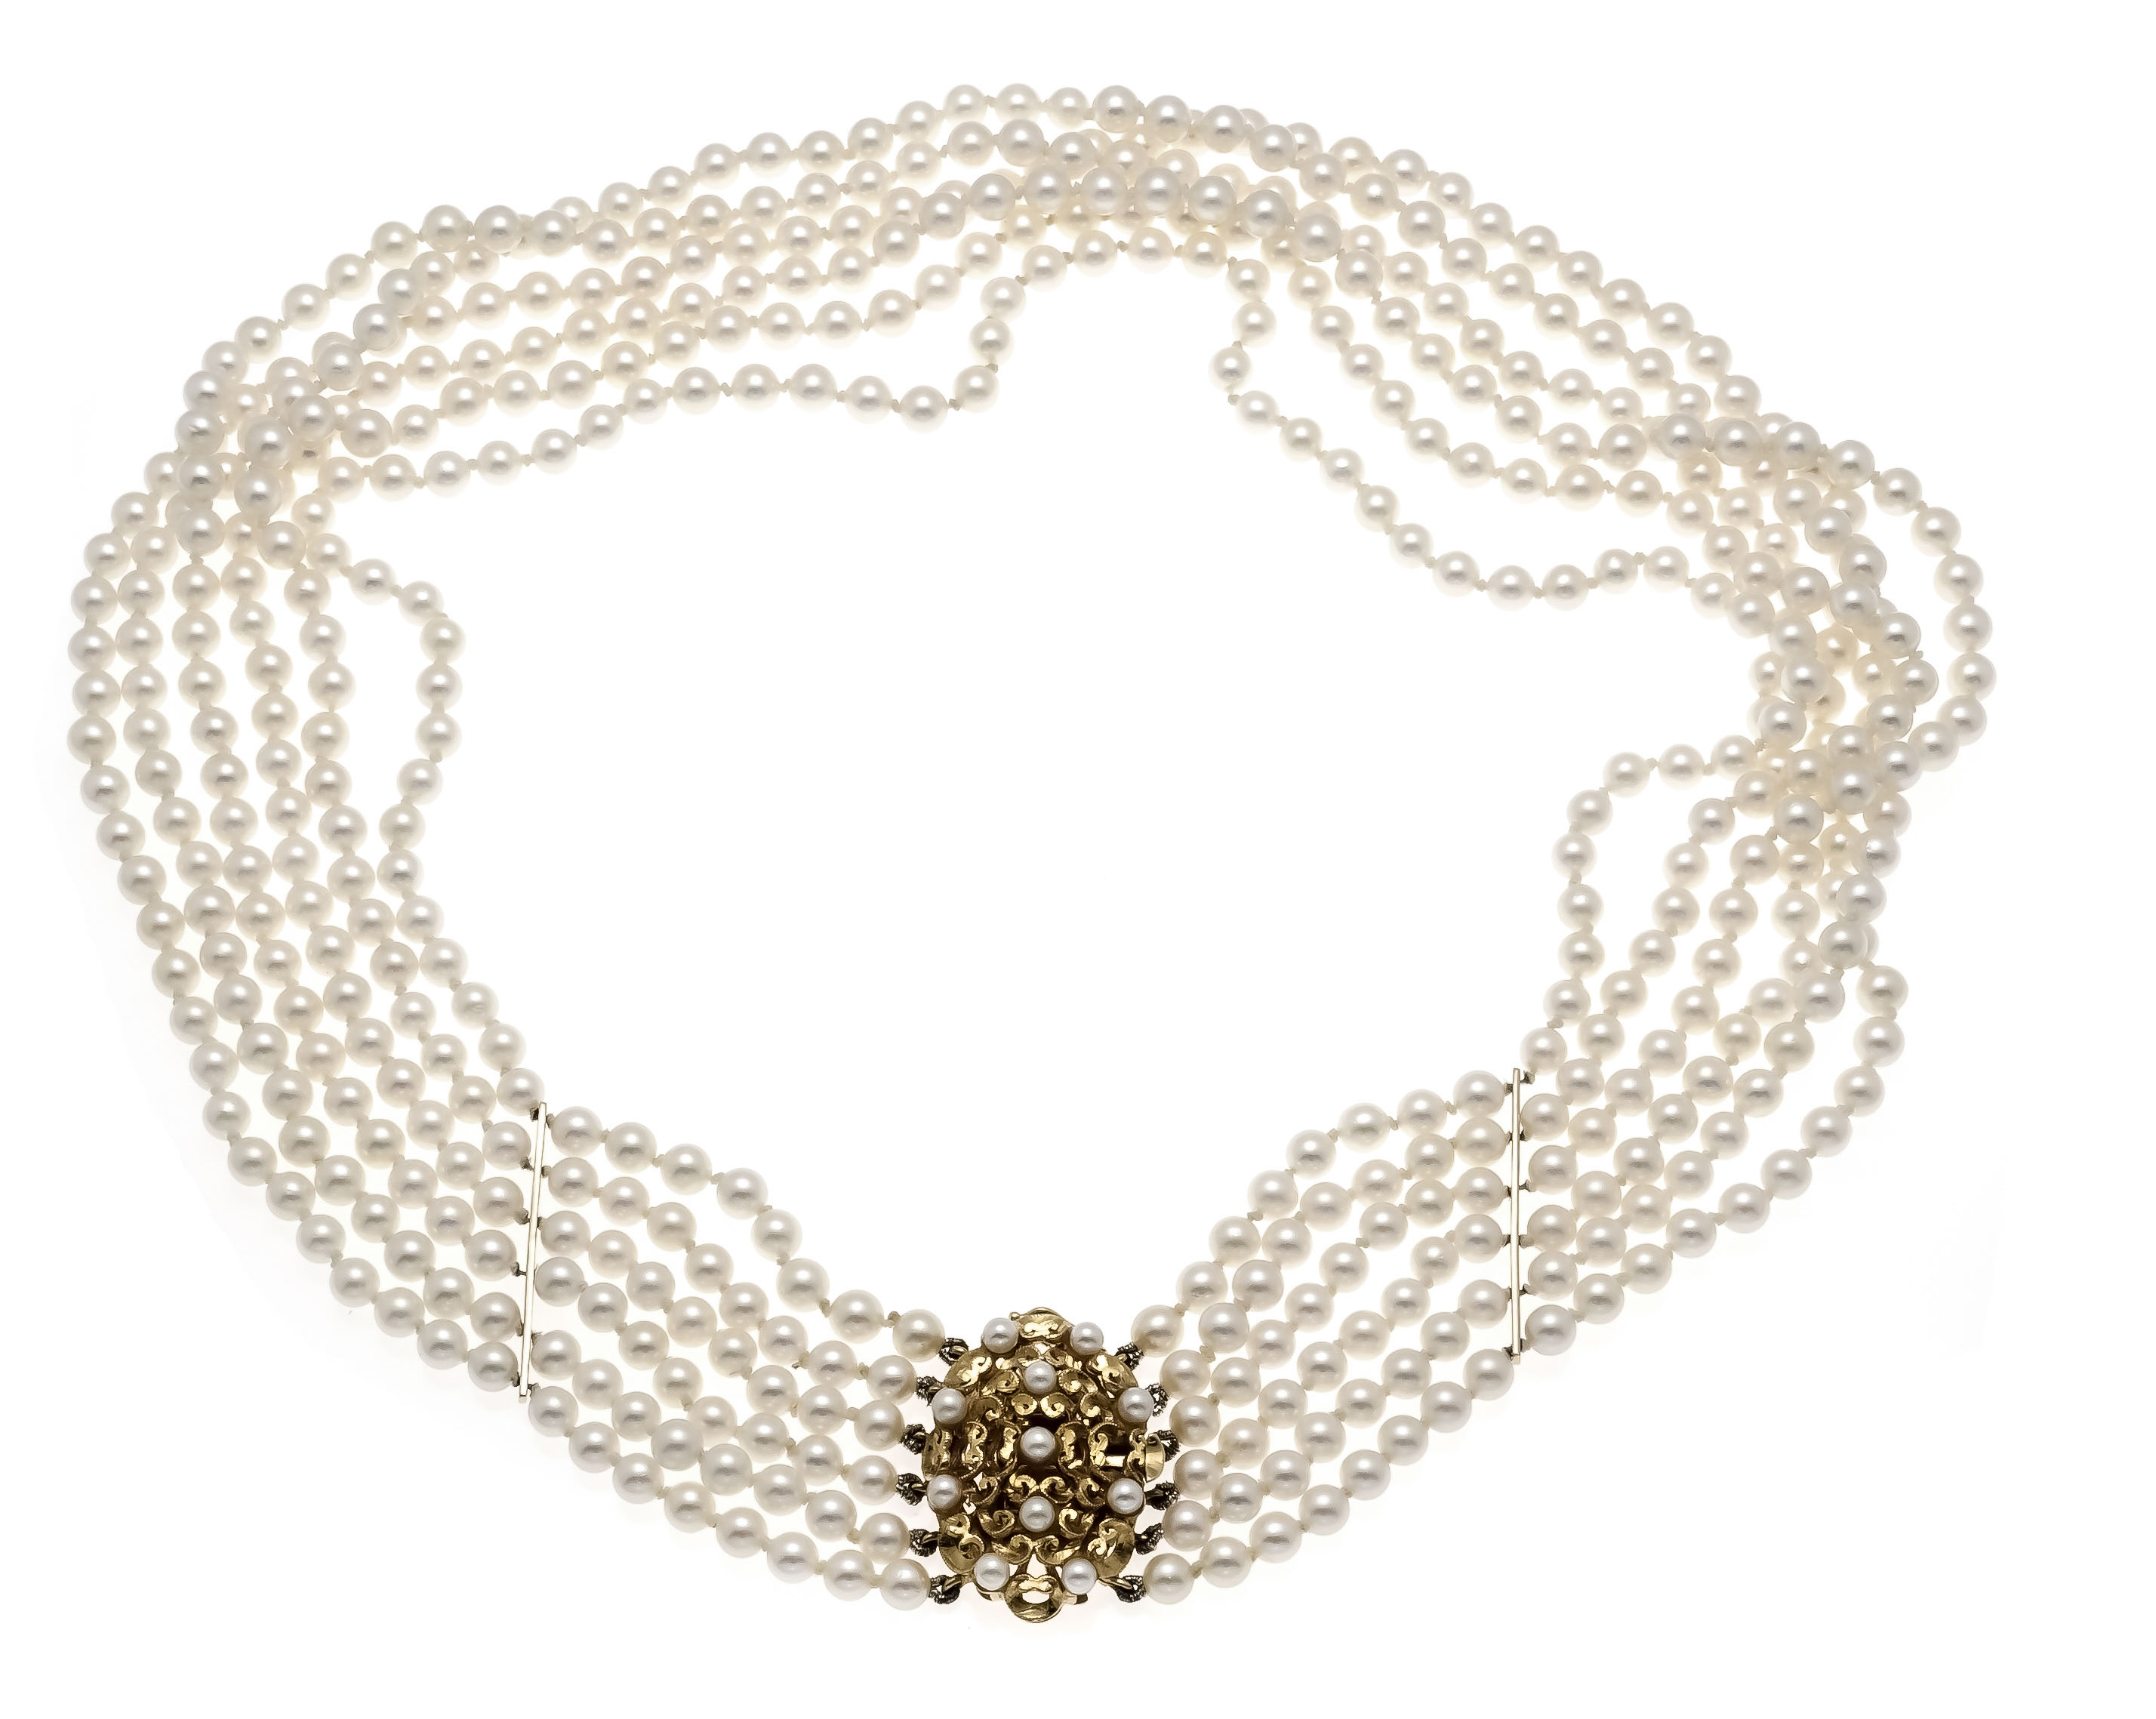 6-row Akoya pearl necklace with filigree showcase clasp GG 750/000 set with 11 creamy white Akoya